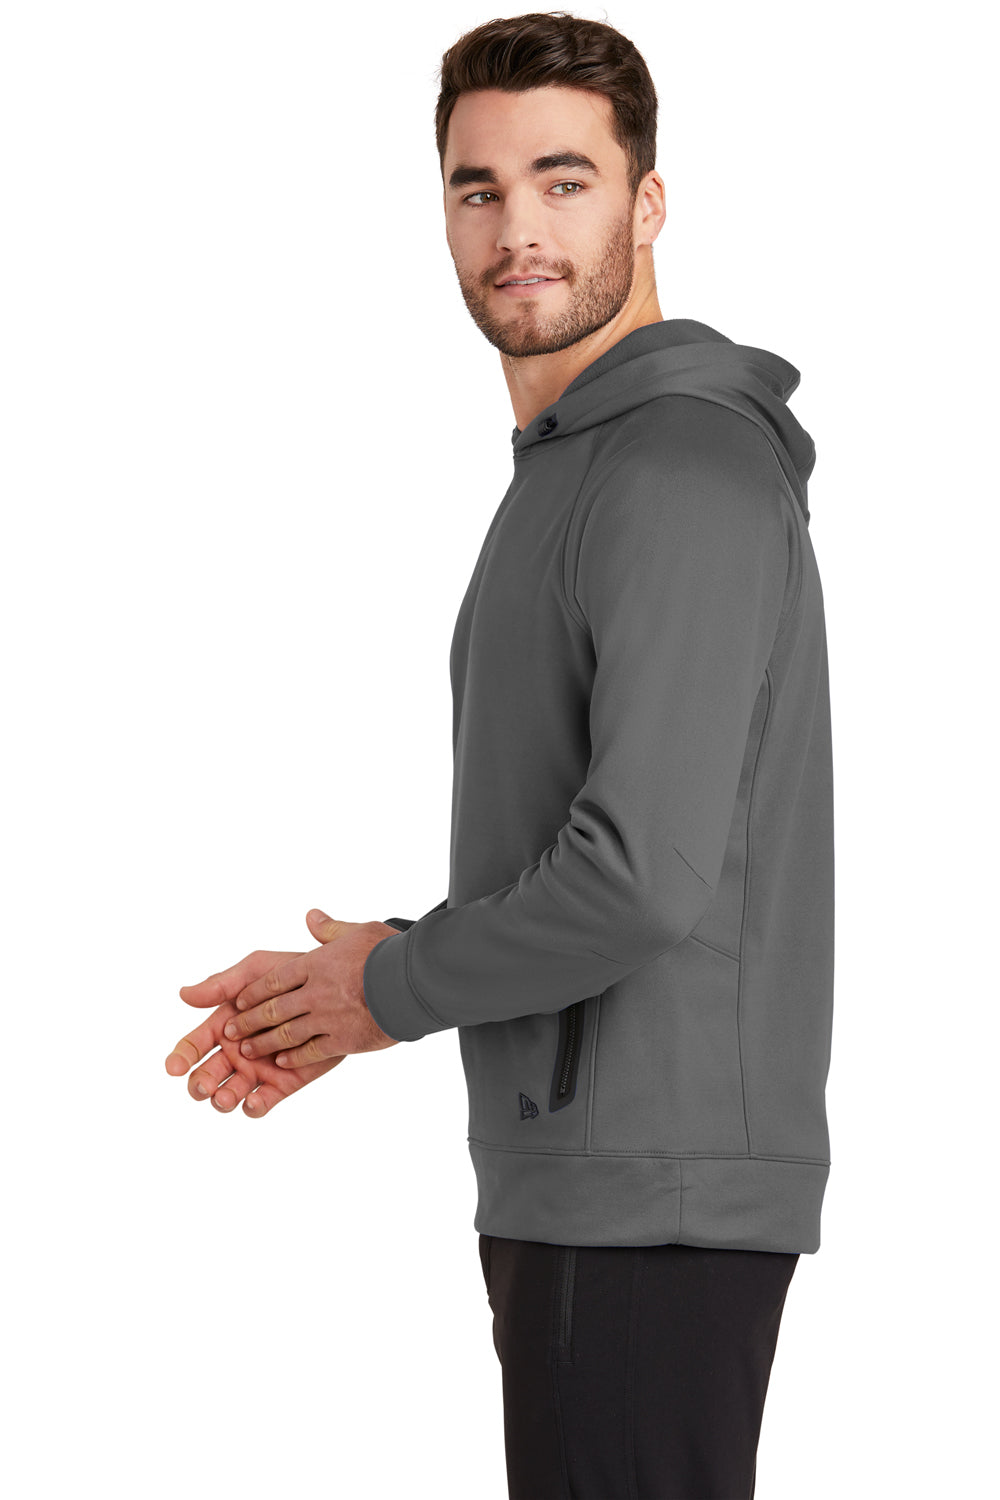 New Era NEA520 Mens Venue Fleece Hooded Sweatshirt Hoodie Graphite Grey Side